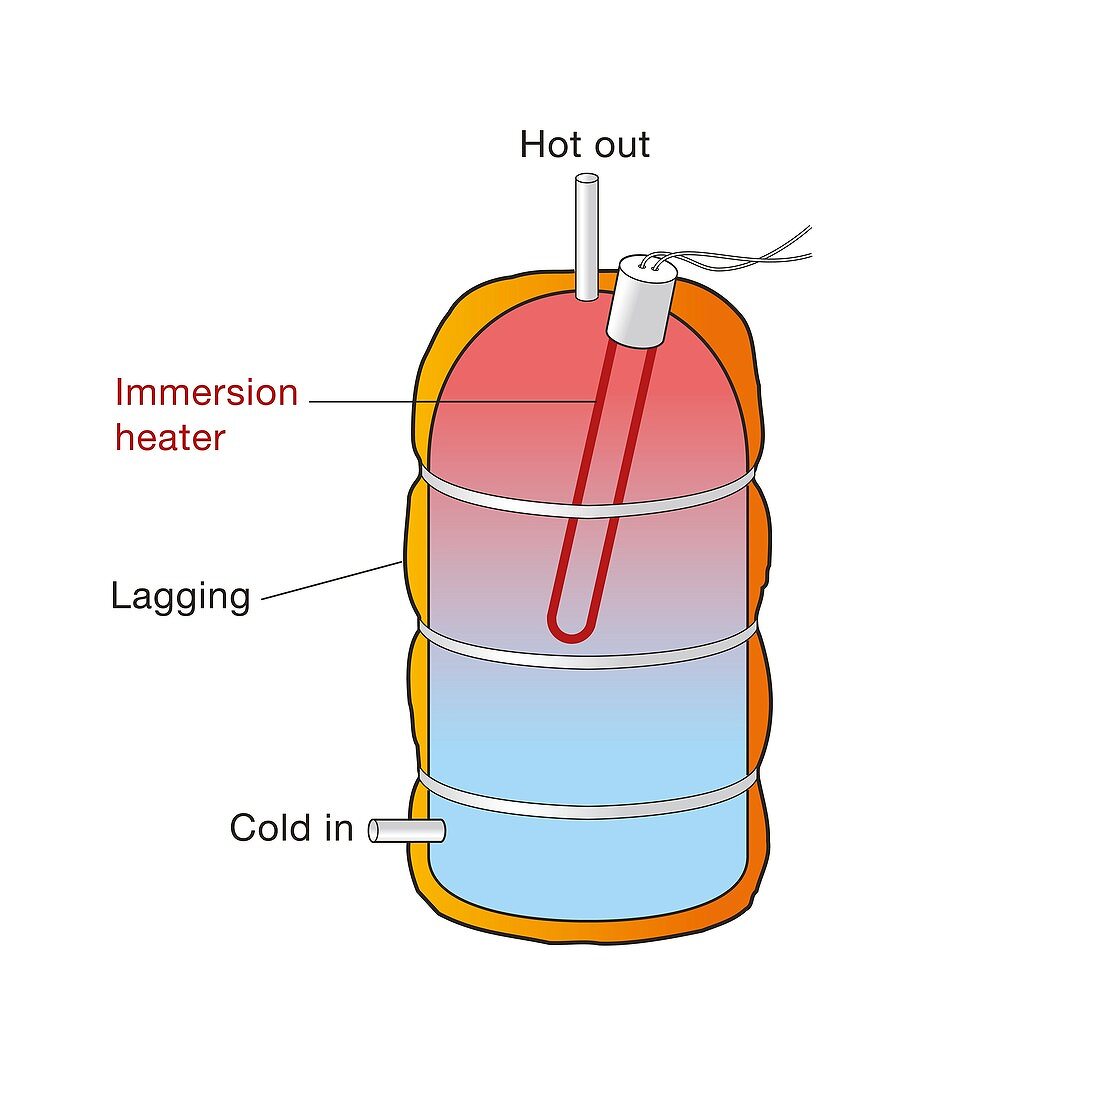 Immersion heater, illustration